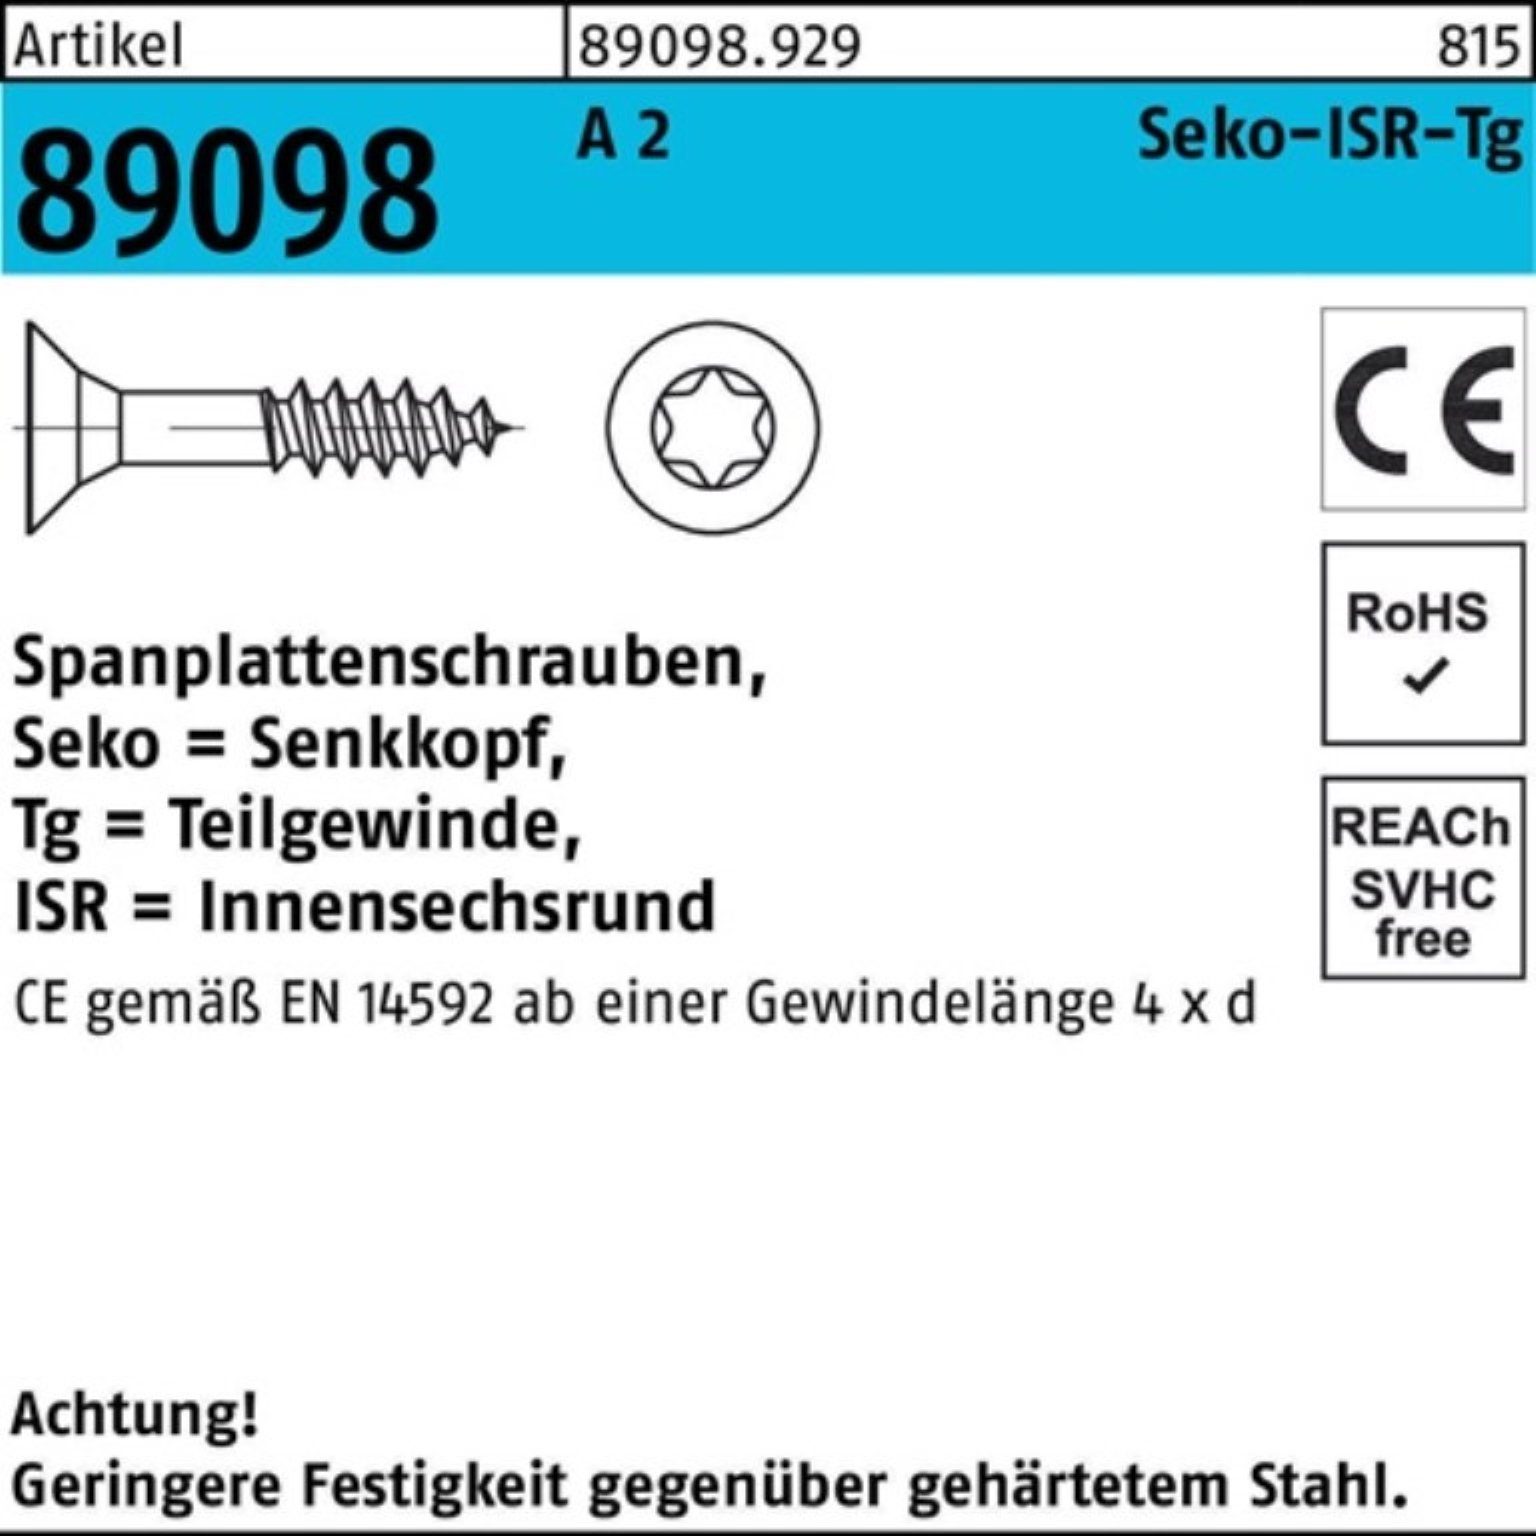 Reyher Spanplattenschraube 1000er Pack Spanplattenschraube SEKO 30-T20 2 A R 89098 TG 4x ISR 1000